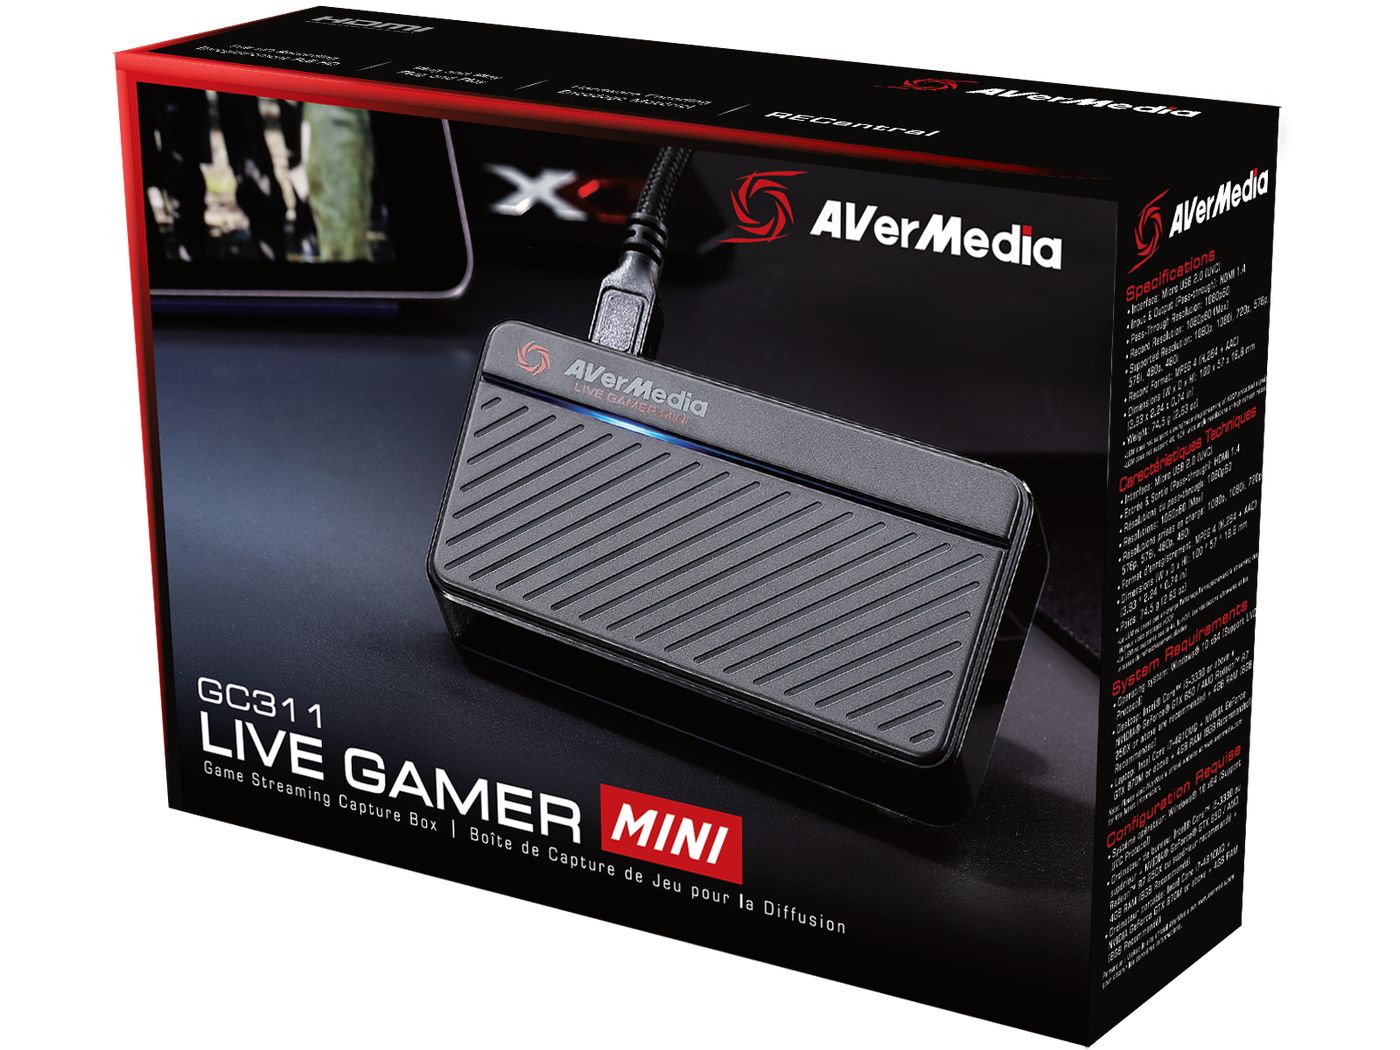 AVerMedia Live Gamer Mini GC311